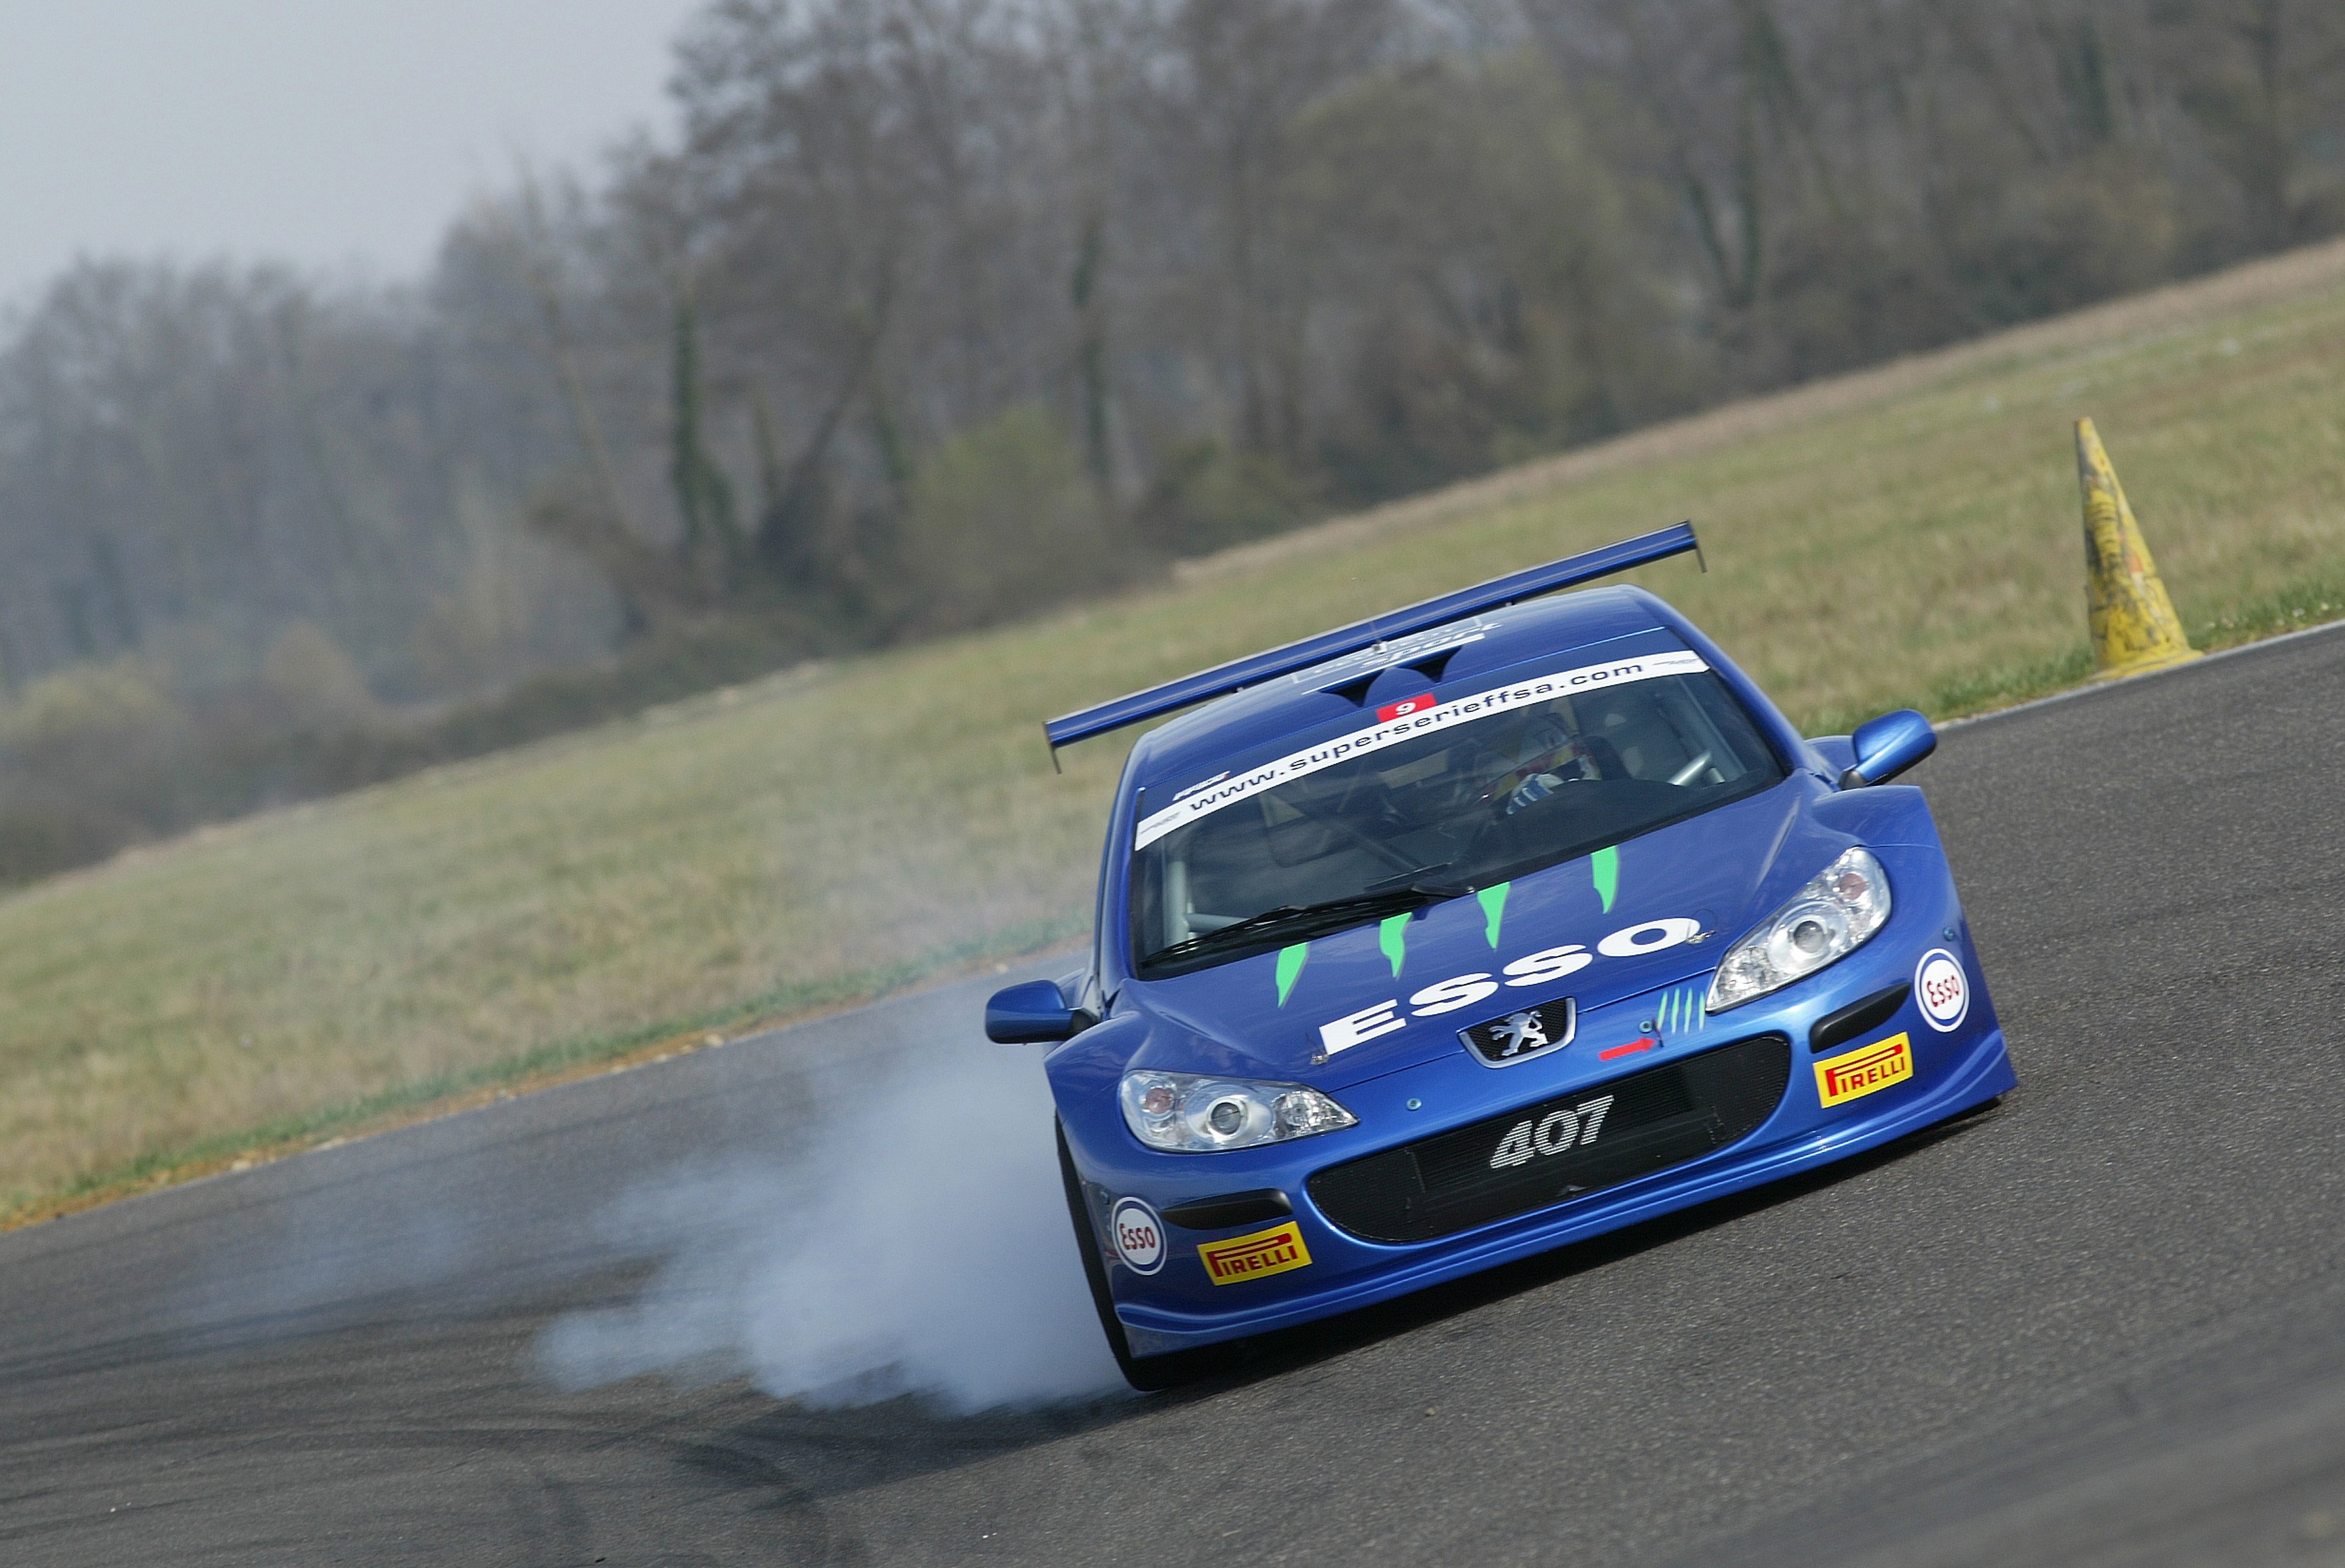 2005, Peugeot, 407, La super serie, Ffsa, Race, Racing Wallpaper